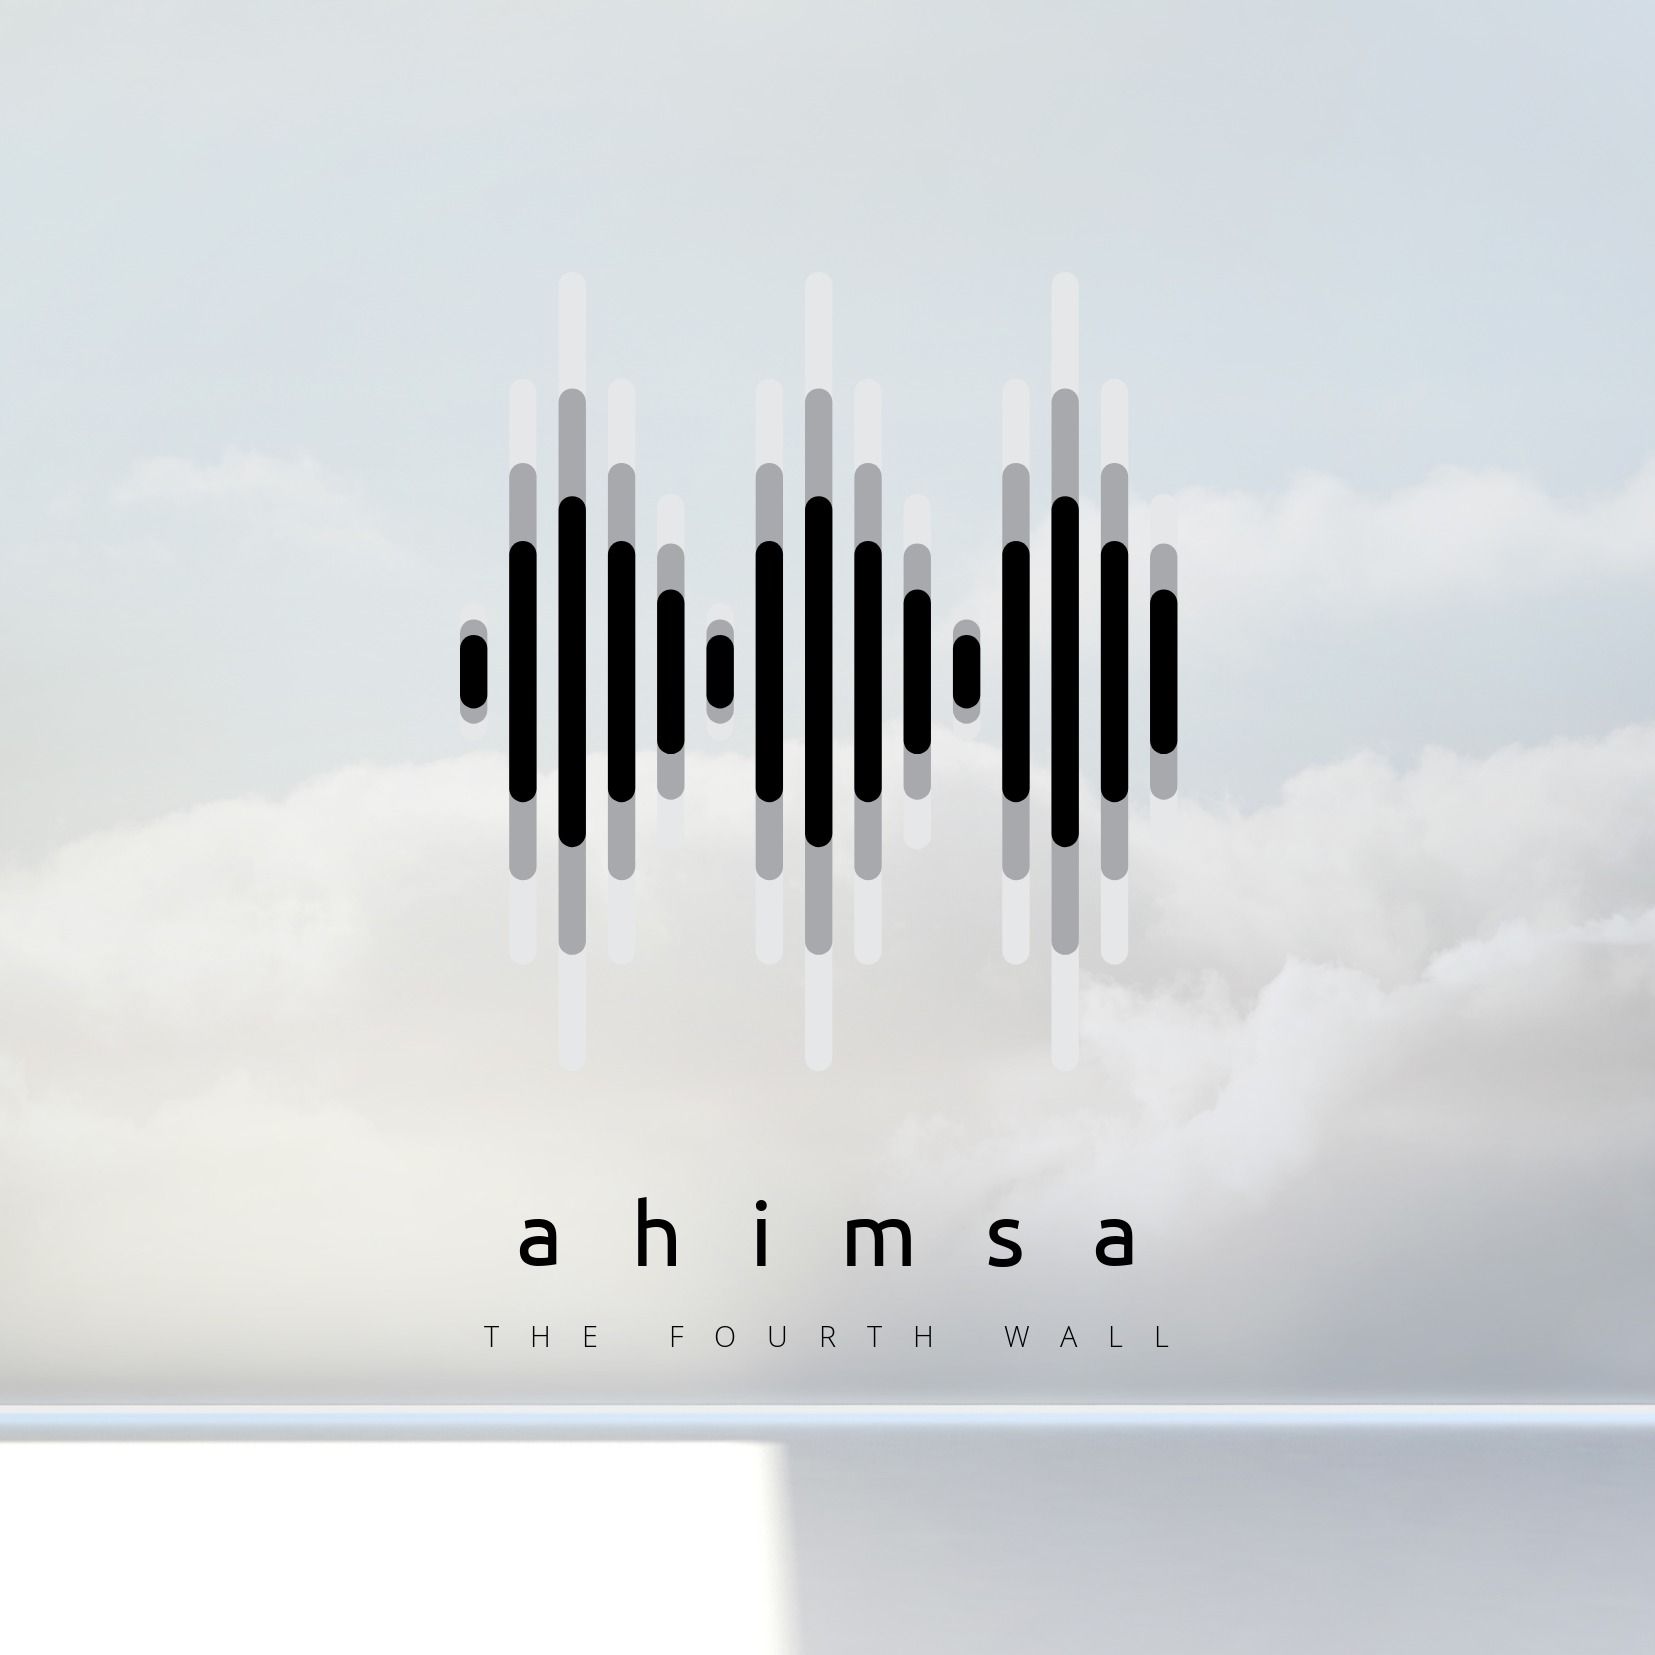 Soundbars on a sky background - Using the open sky in album cover design - Image